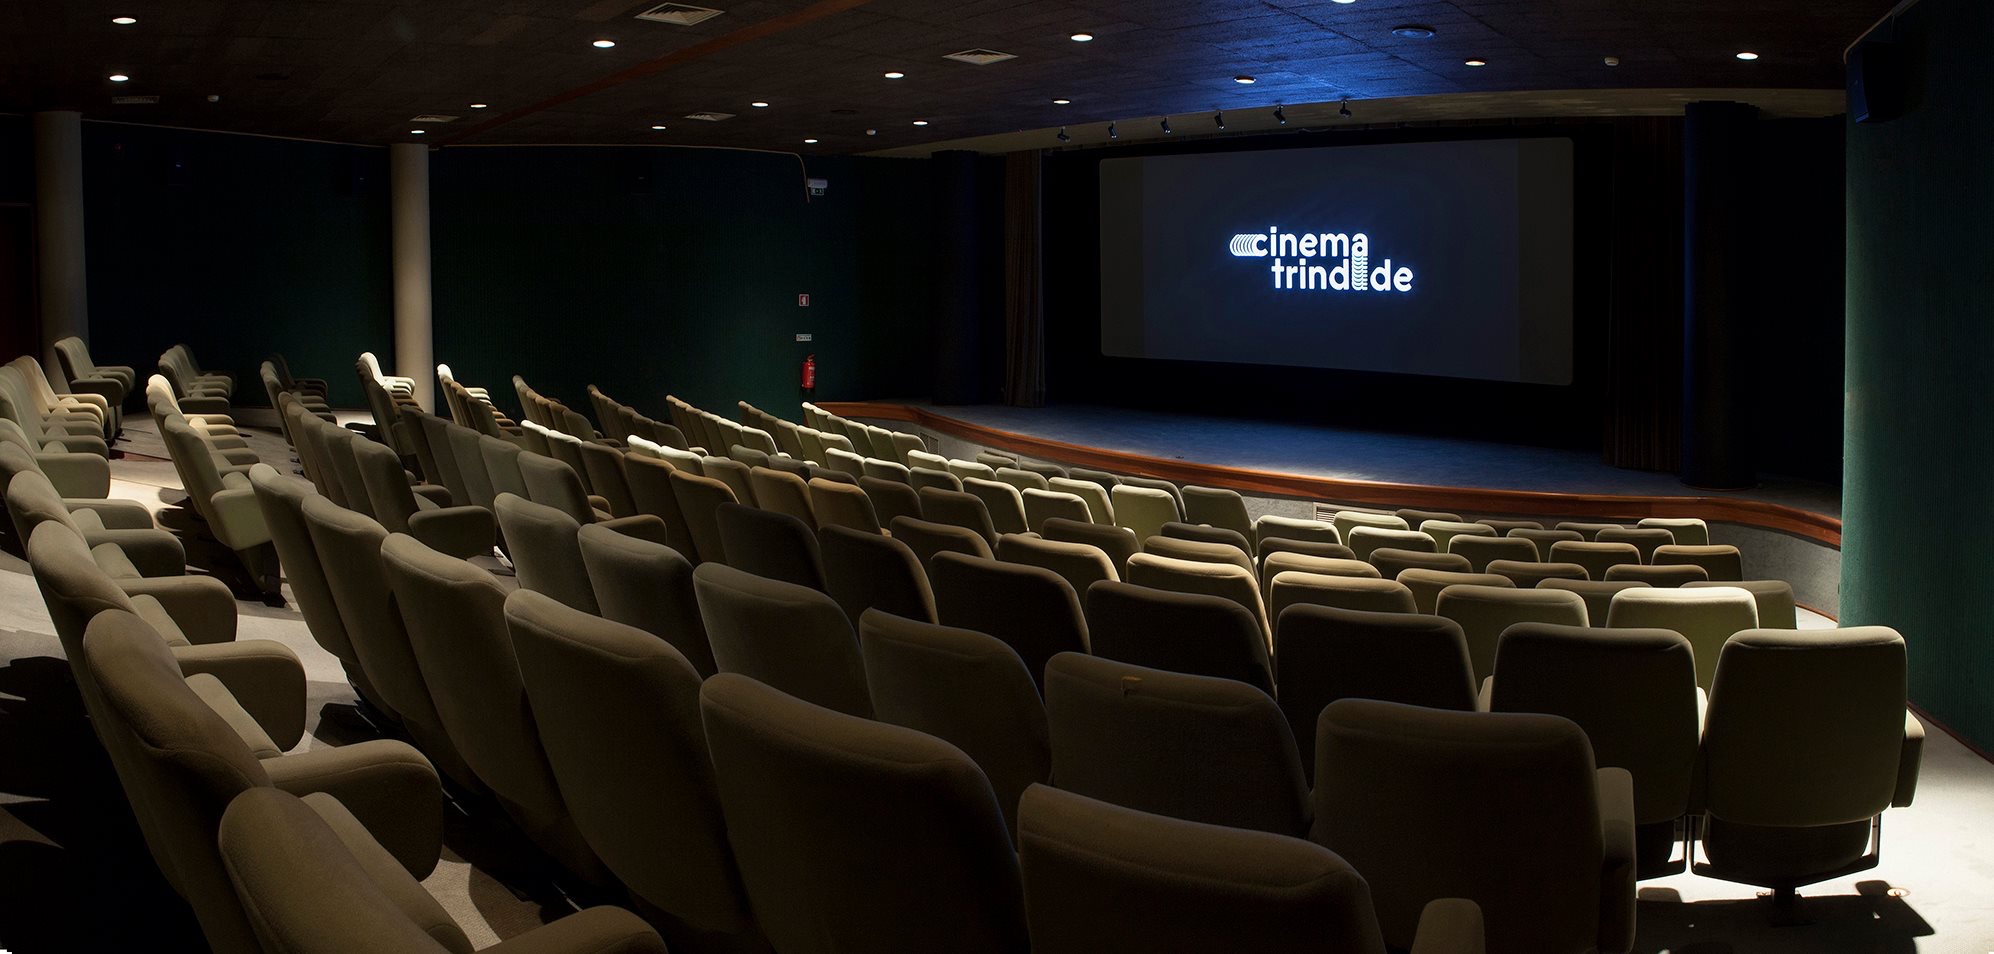 Cinema Trindade - Cinema